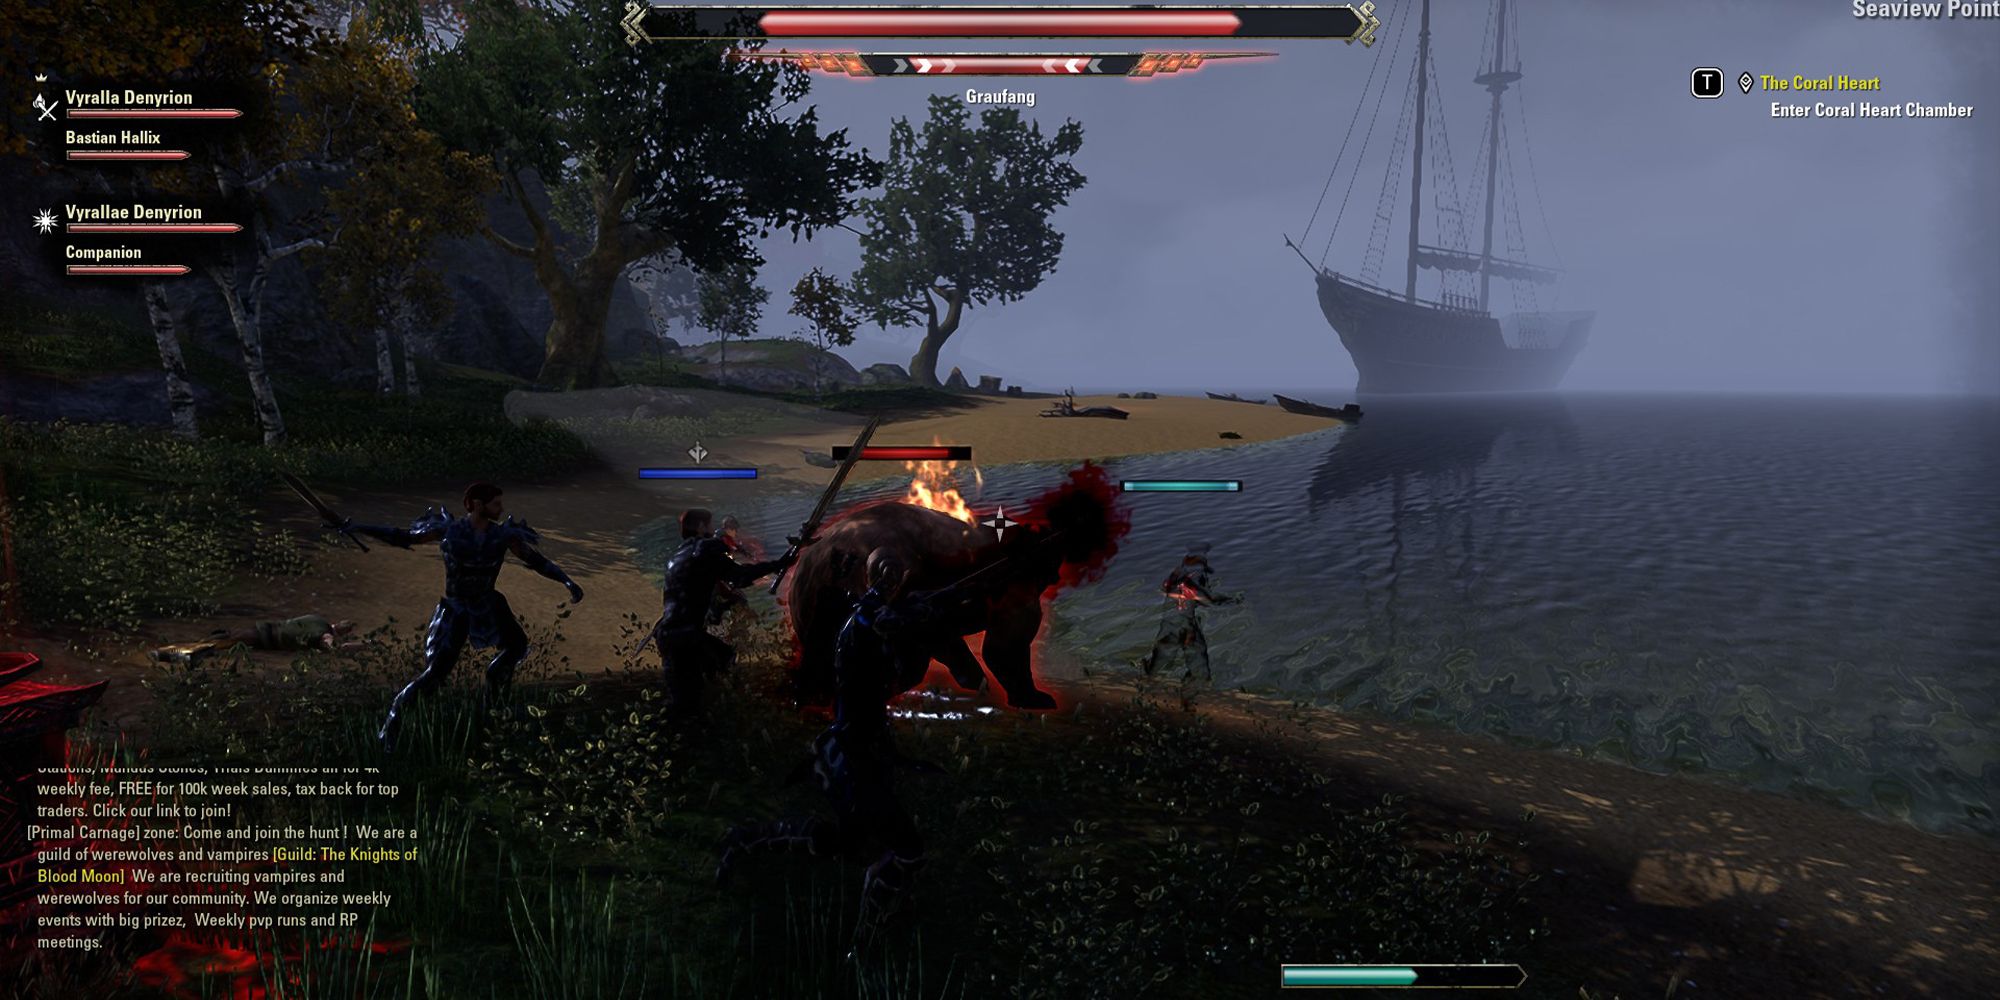 Elder Scrolls Online Fighting Graufang at Seaview Point